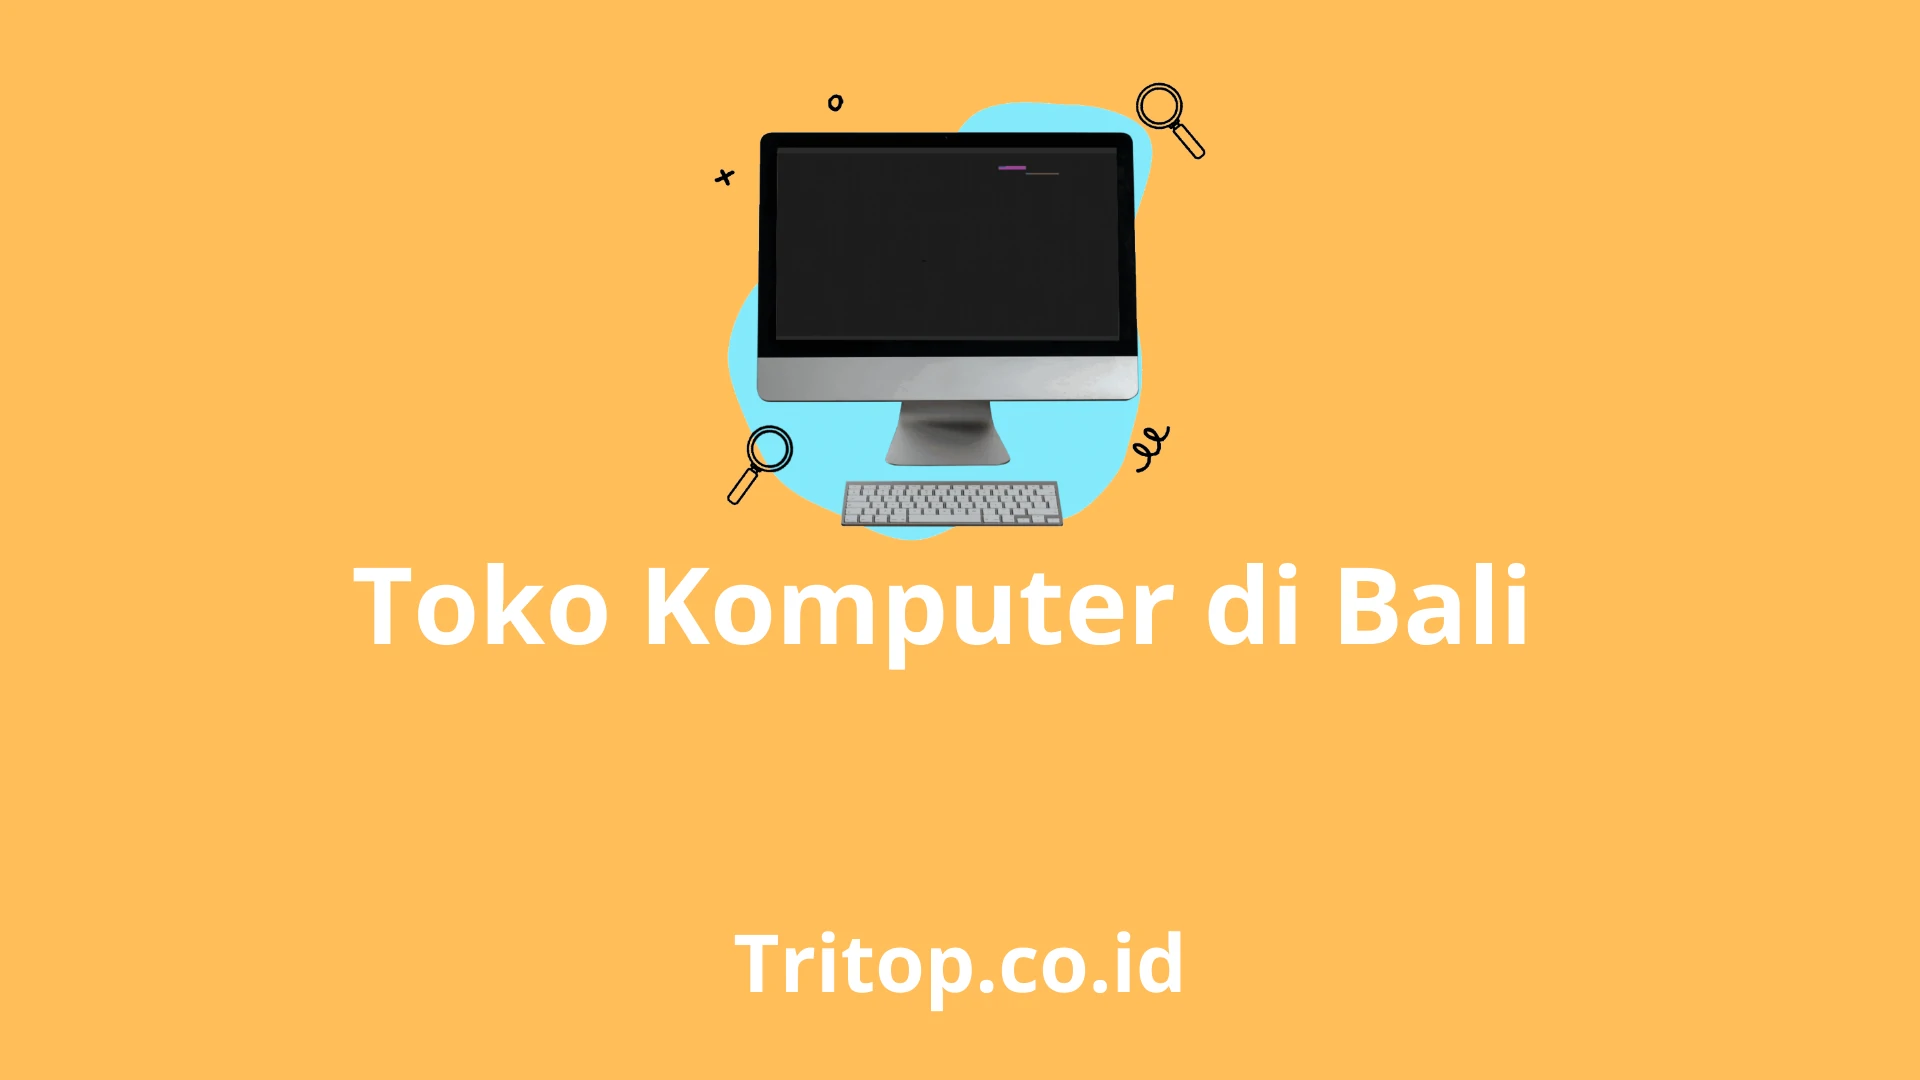 Toko Komputer Bali Tritop.co.id